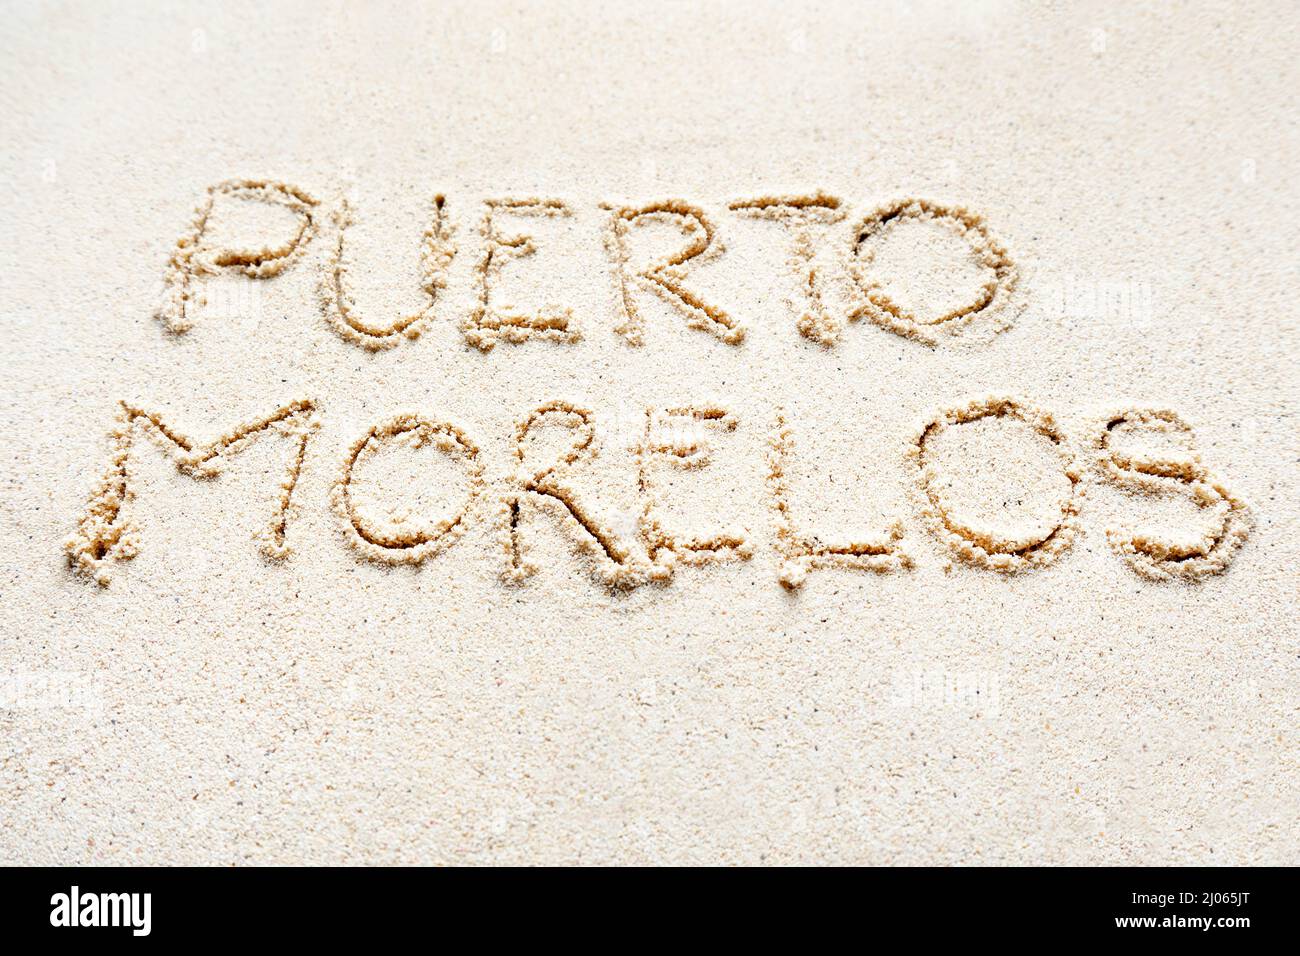 Handwriting words 'Puerto Morelos' on sand of beach Stock Photo